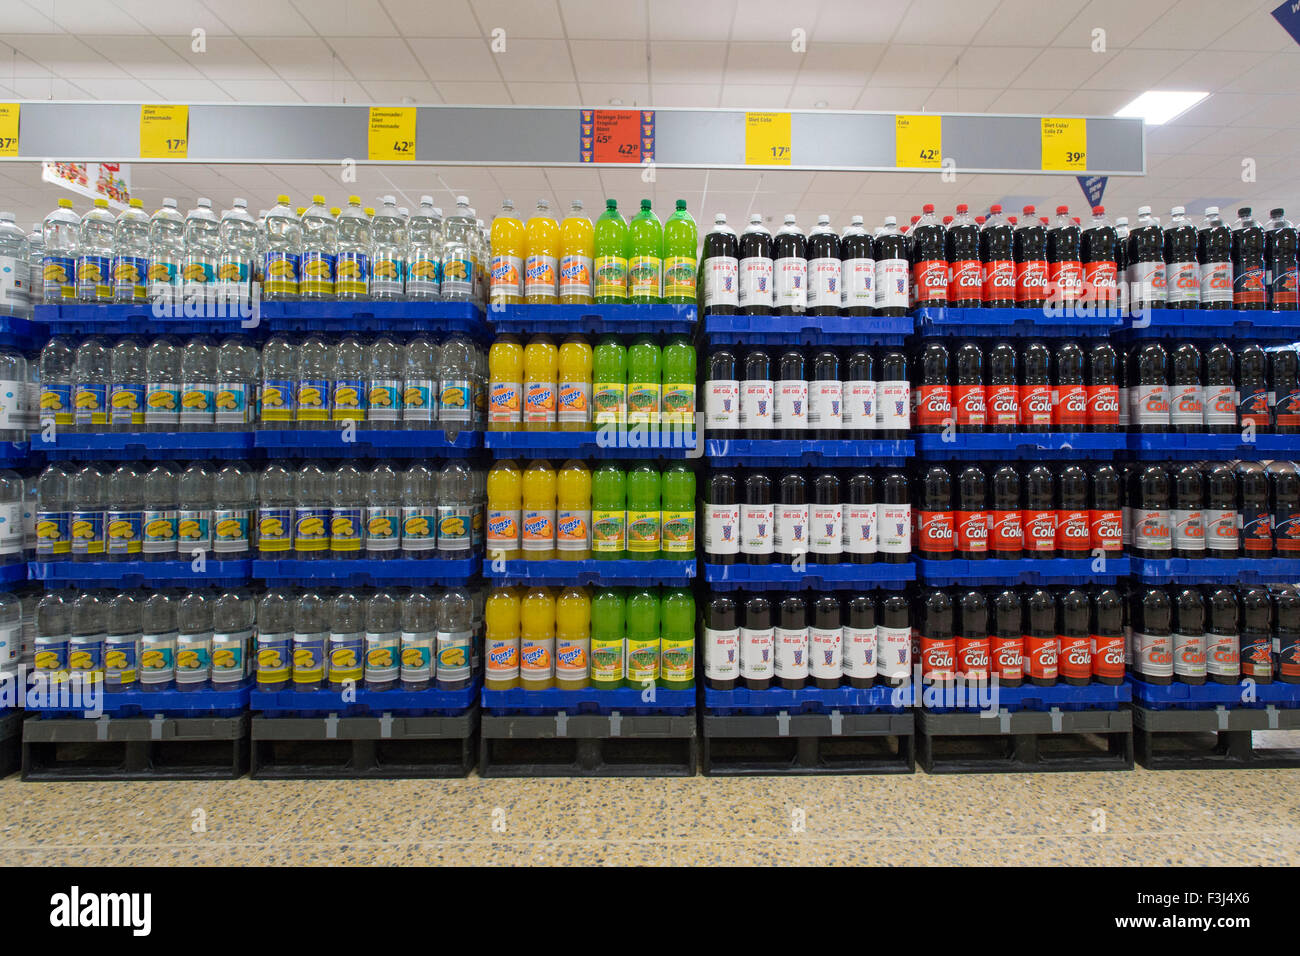 Bibite gassate in vendita in un supermercato. Bevande gassate causa carie e diabete. Foto Stock